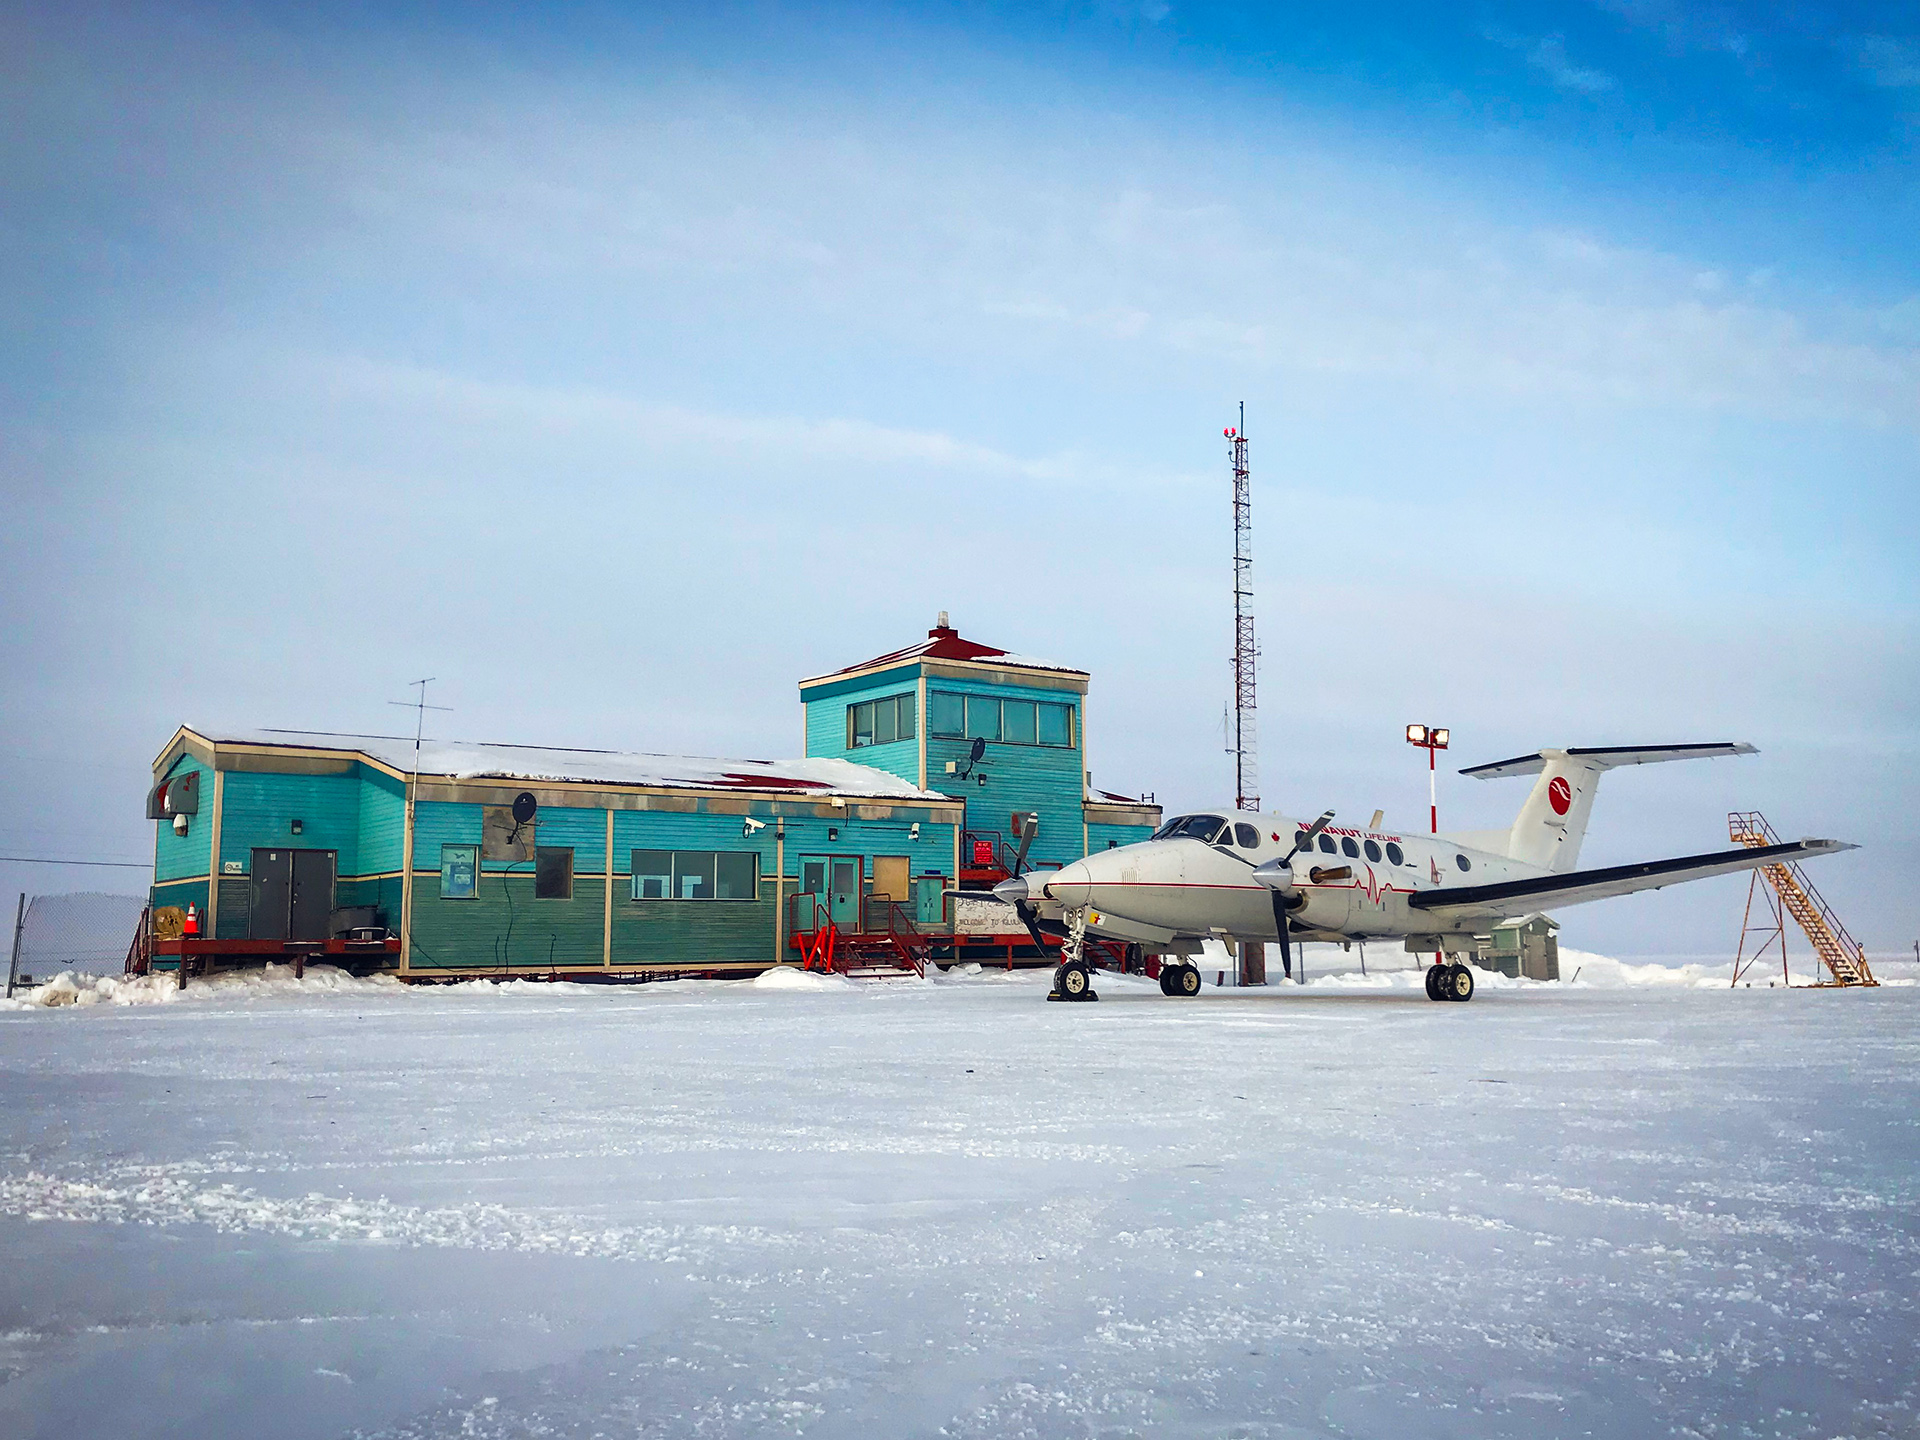 A Keewatin Air (Nunavut Lifeline) Beechcraft Super King Air providing medevac services to the remote community of Iglulik, Nunavut, Canada.